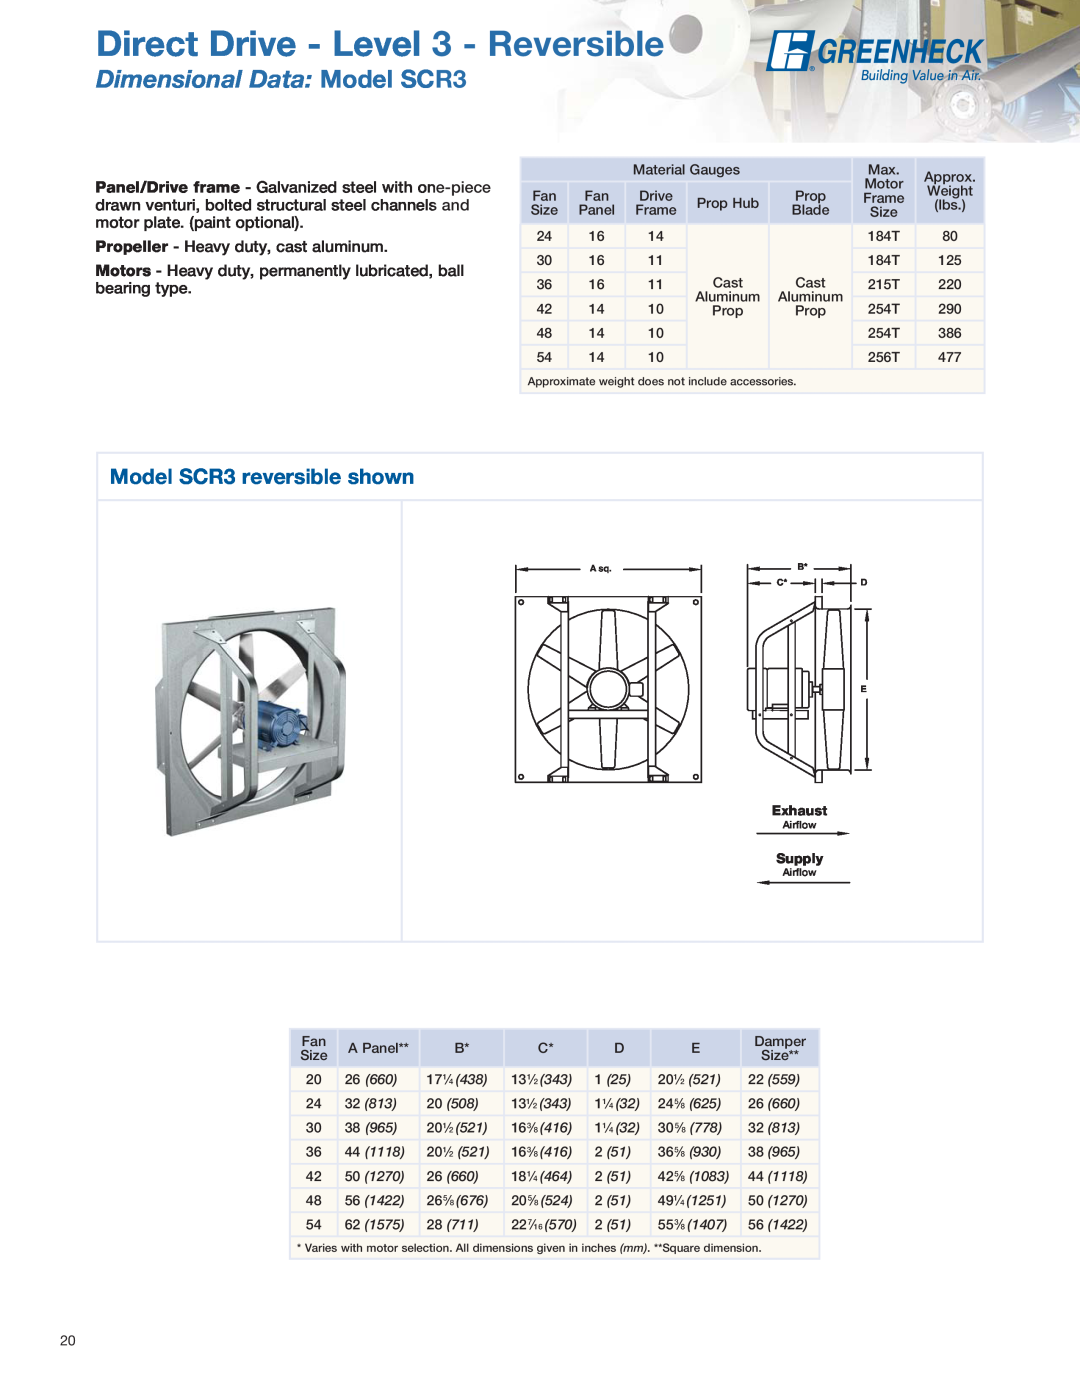 Greenheck Fan SS1, SE1 manual Direct Drive - Level 3 - Reversible, Dimensional Data Model SCR3, Model SCR3 reversible shown 